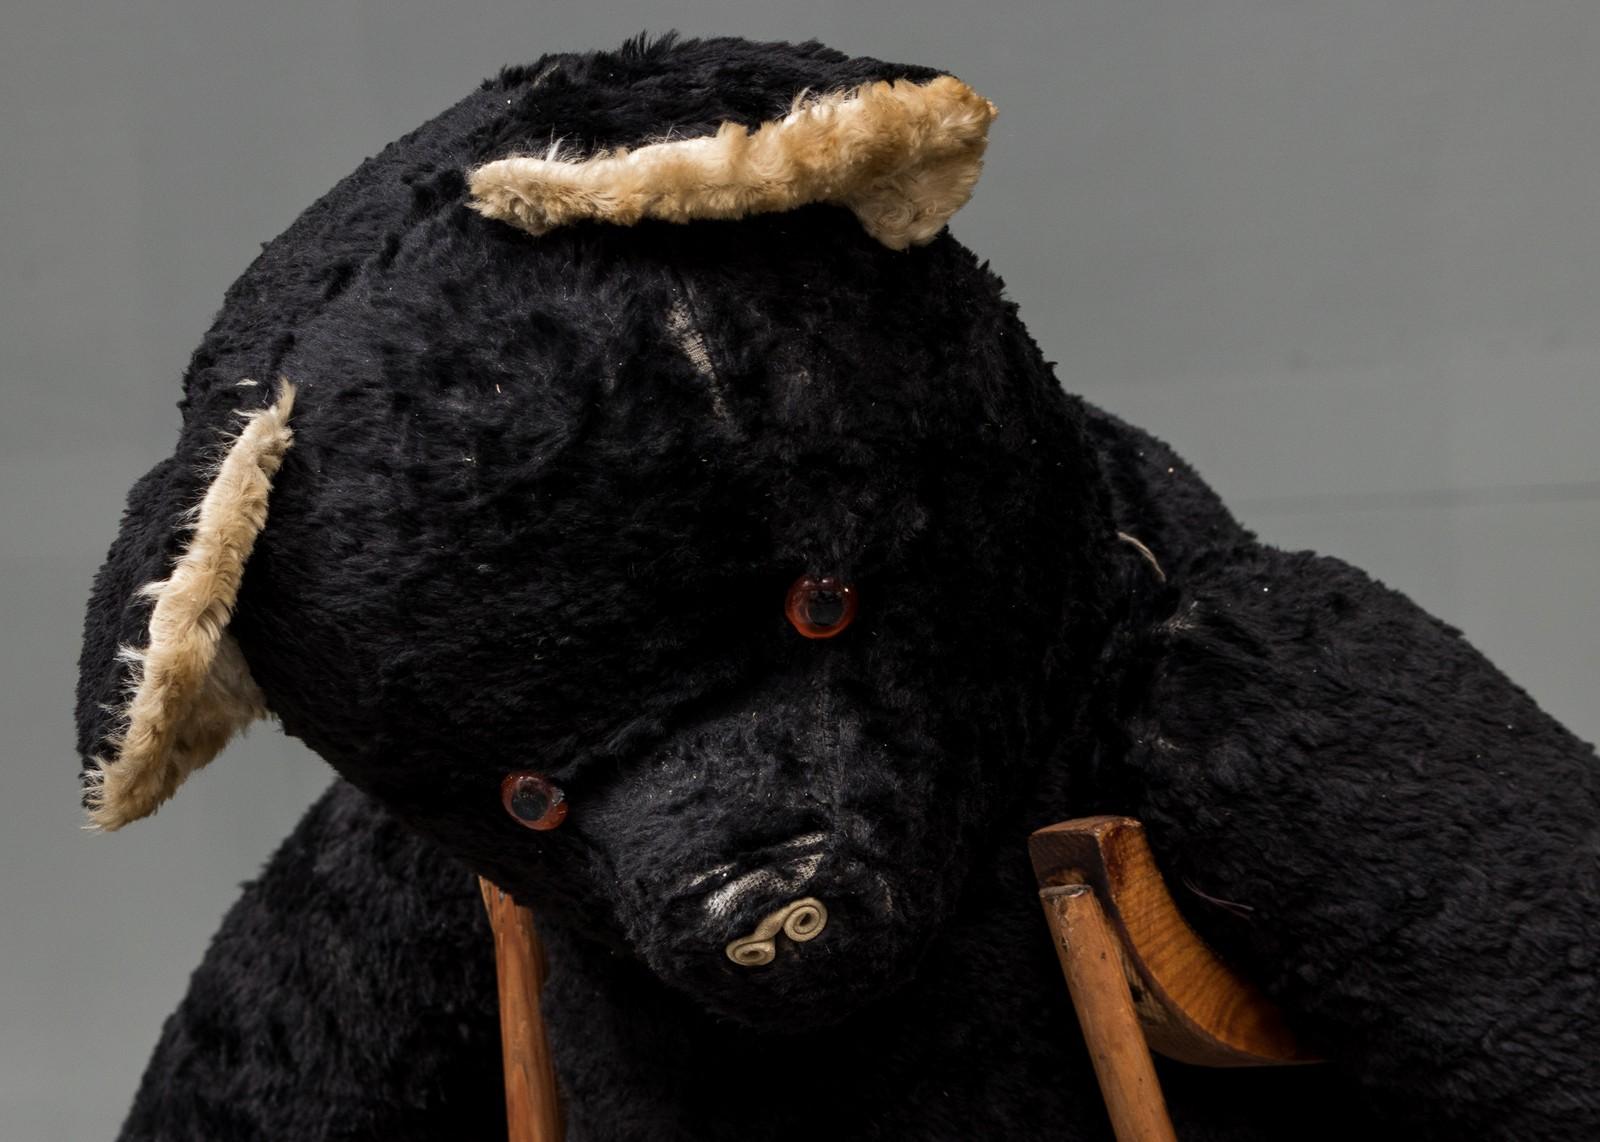 Edwardian Teddy Bear on Crutches For Sale